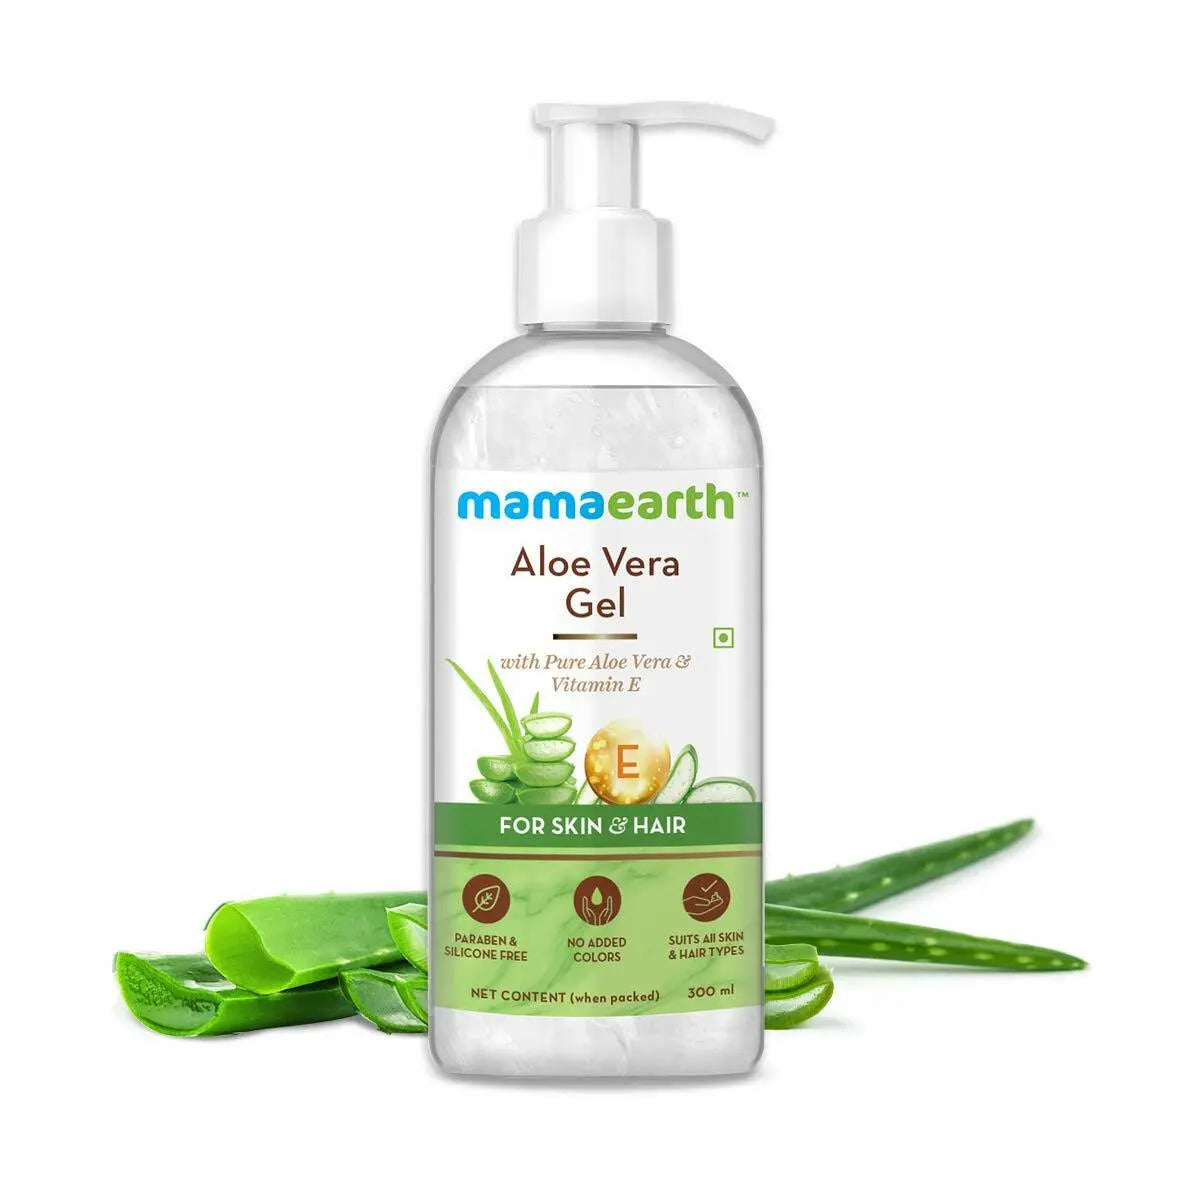 Mamaearth Aloe Vera Gel with Pure Aloe Vera & Vitamin E for Skin and Hair -300ml